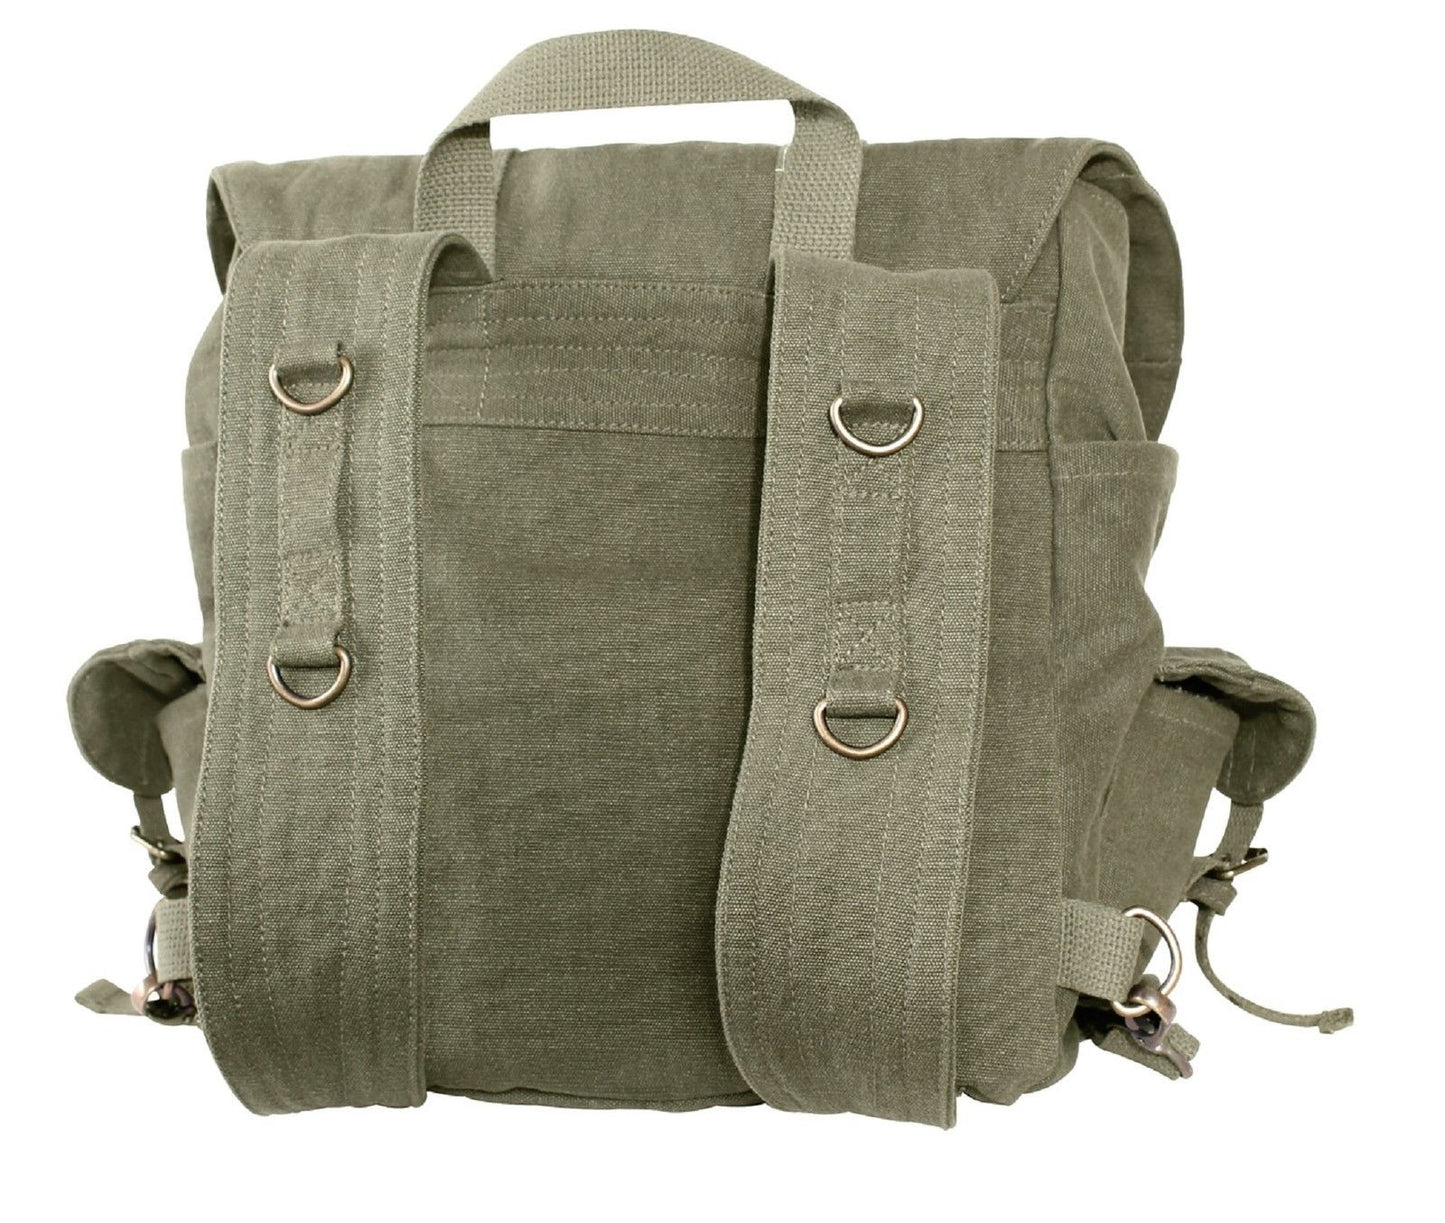 Vintage Style Olive Drab Compact Weekender Canvas Backpack w/ Medic Cross